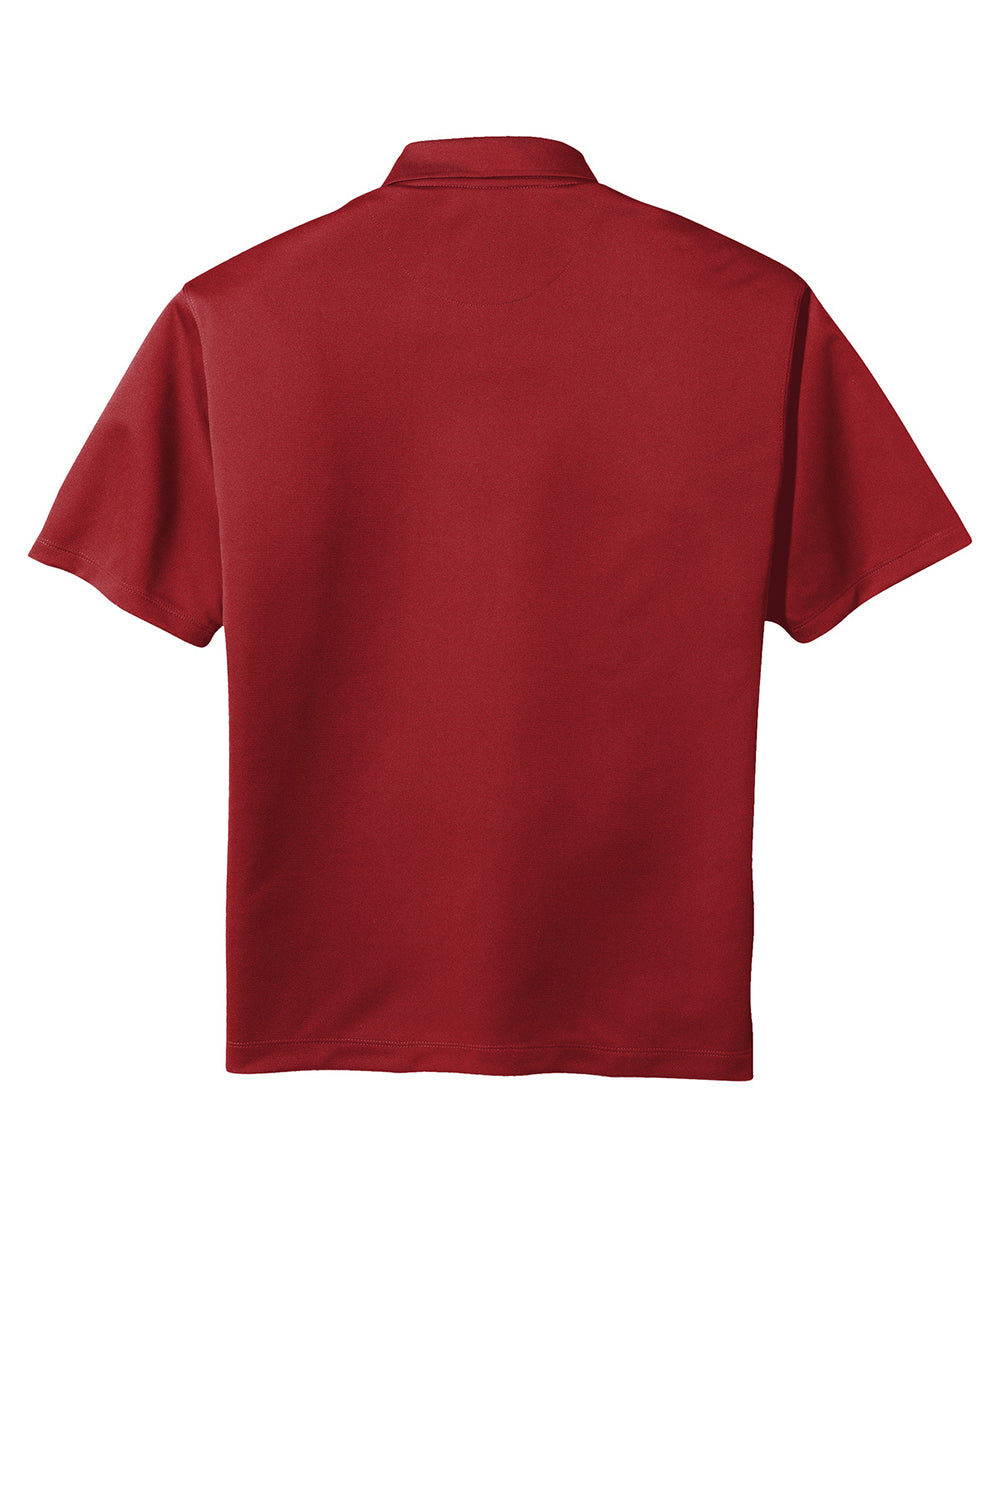 Nike 203690 Mens Tech Basic Dri-Fit Moisture Wicking Short Sleeve Polo Shirt Pro Red Flat Back